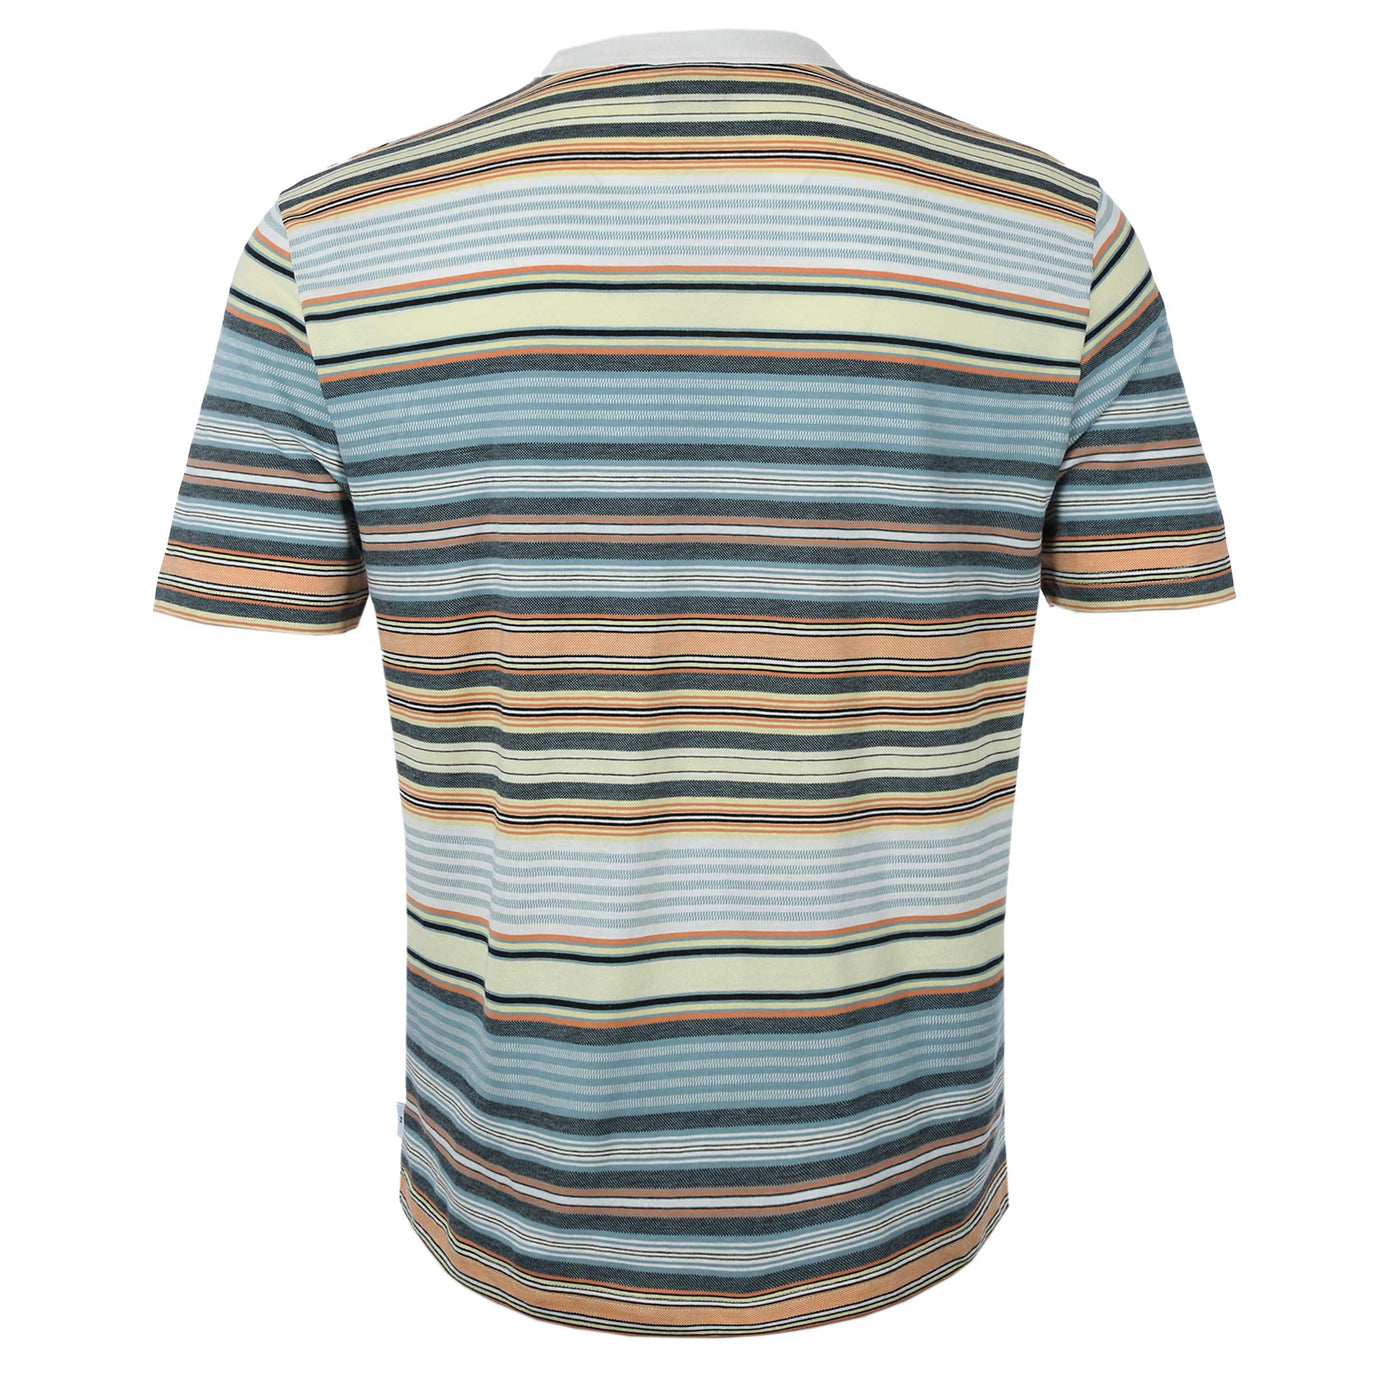 Paul Smith Stripe T Shirt in Multi Back